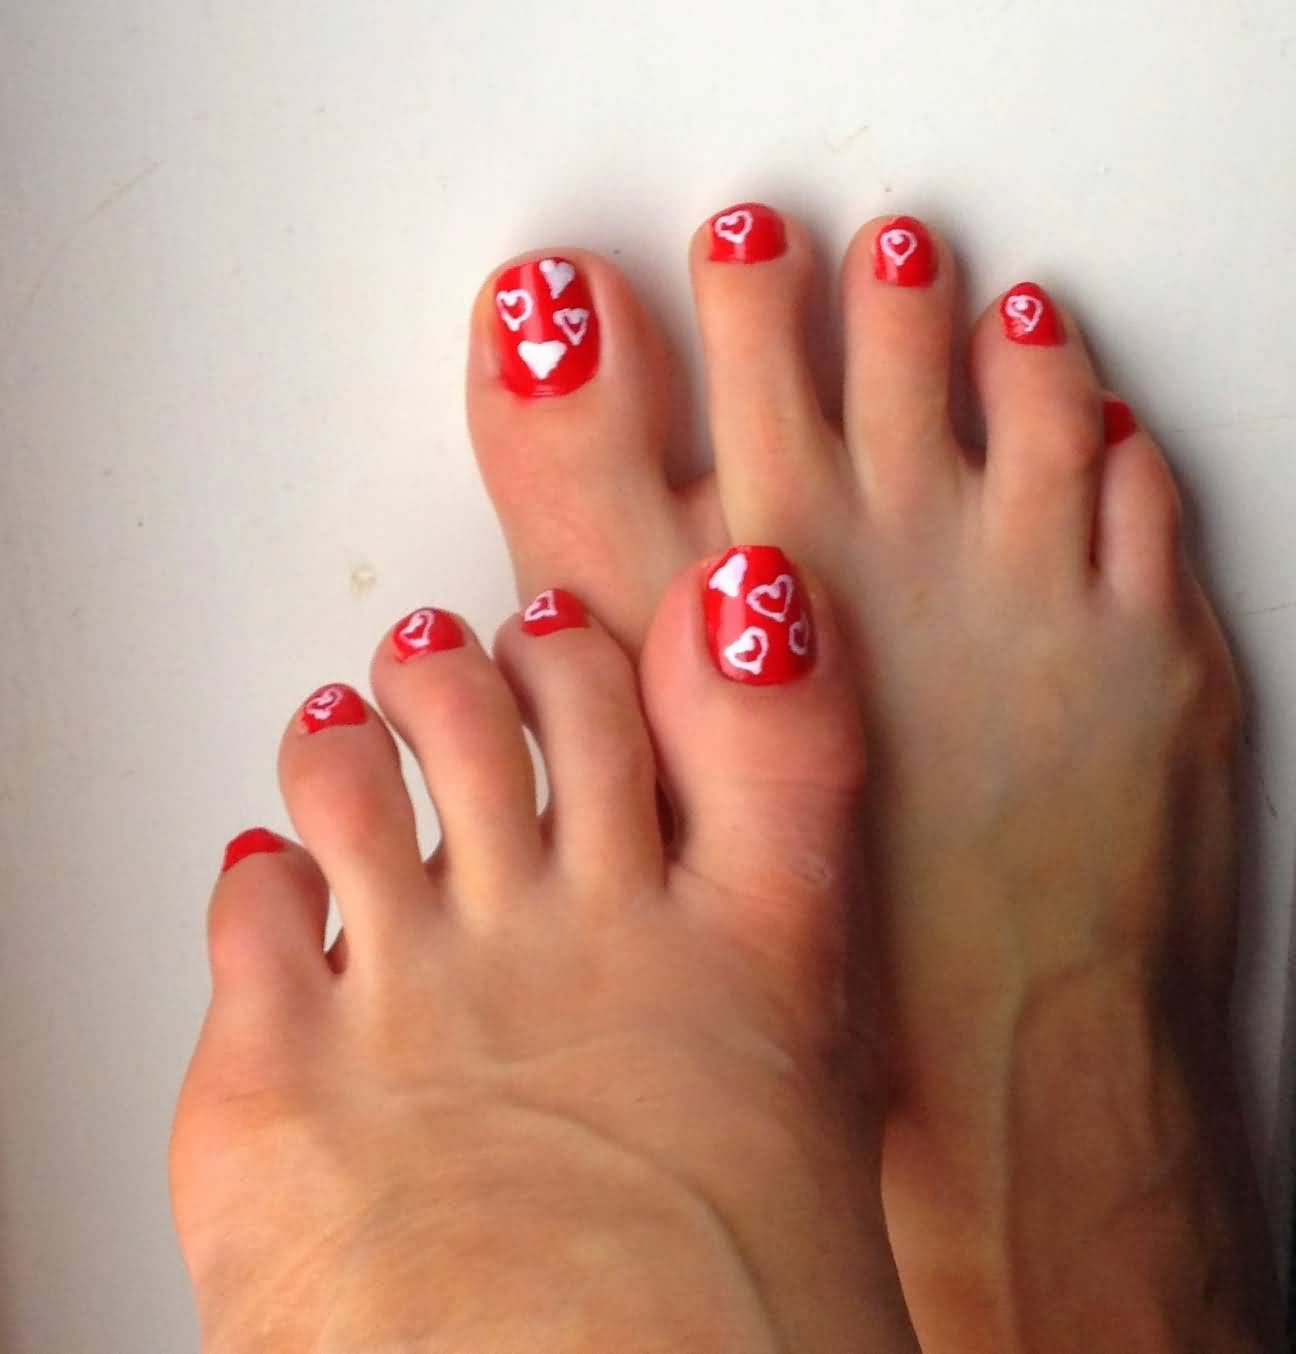 Pink Toe Nails With White Hearts Nail Art Design Idea